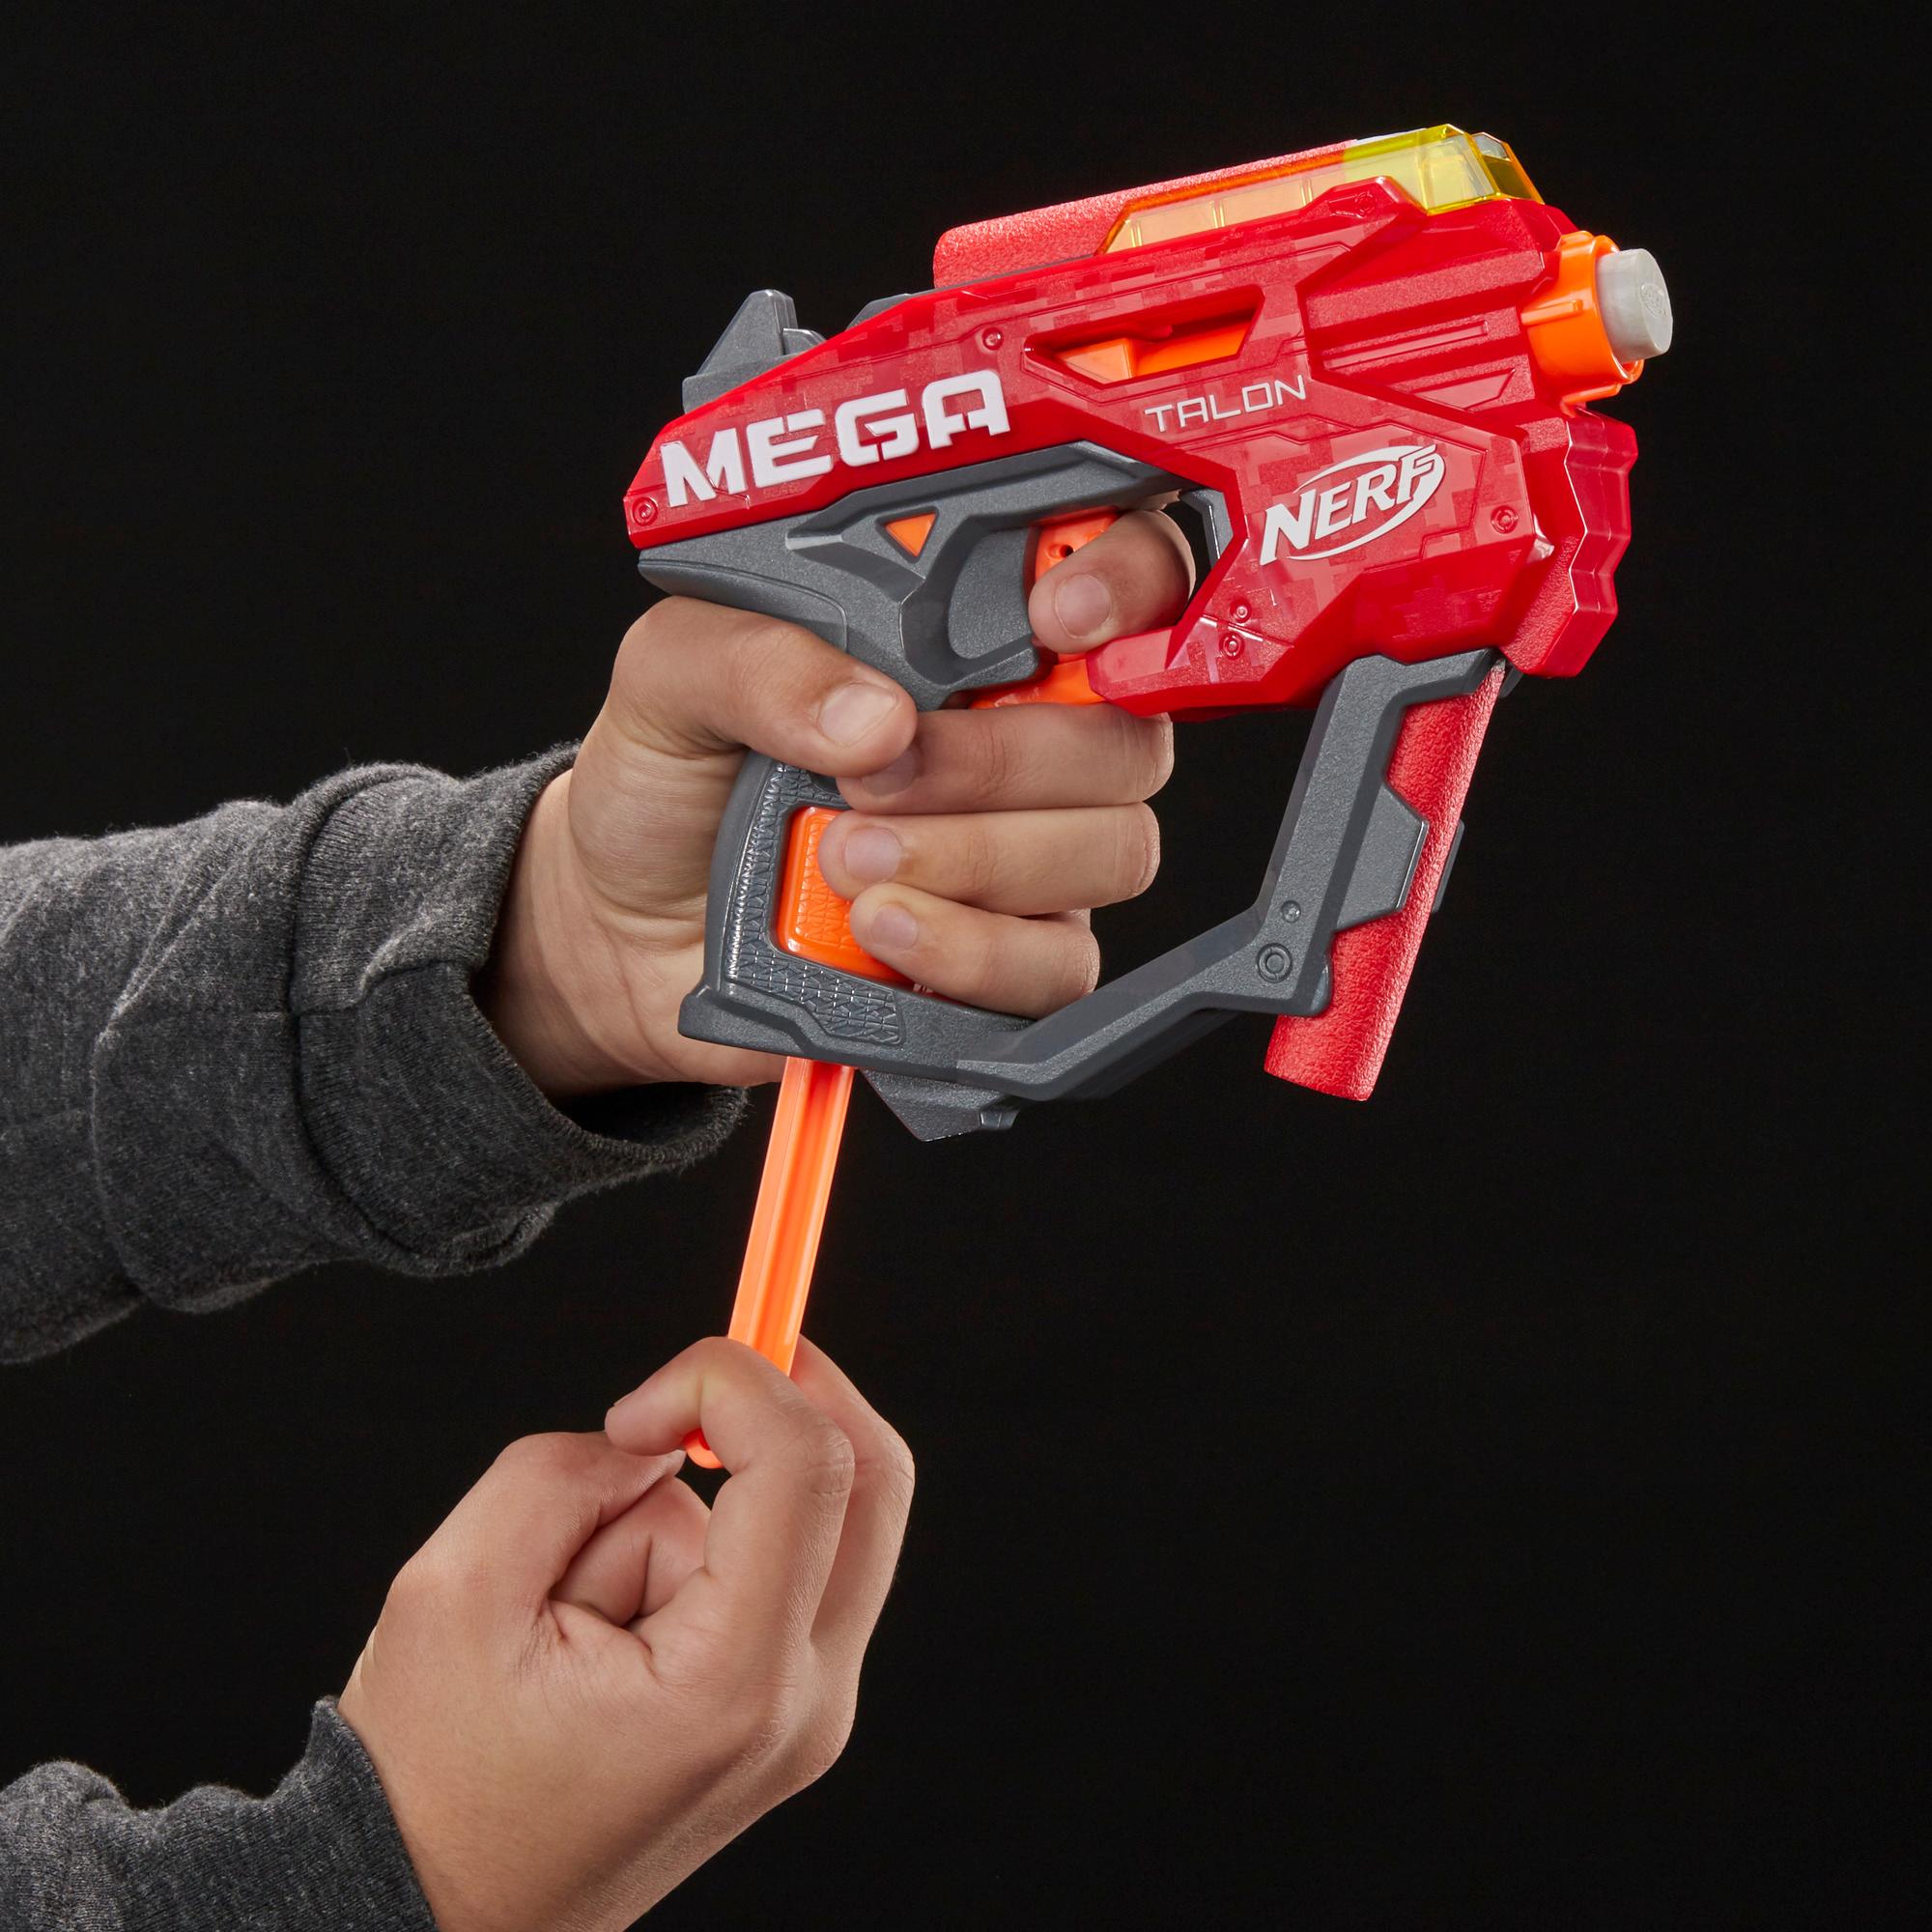 Nerf Mega Talon Blaster – enthält 3 AccuStrike Nerf Mega Darts – für Kinder, Teenager, Erwachsene